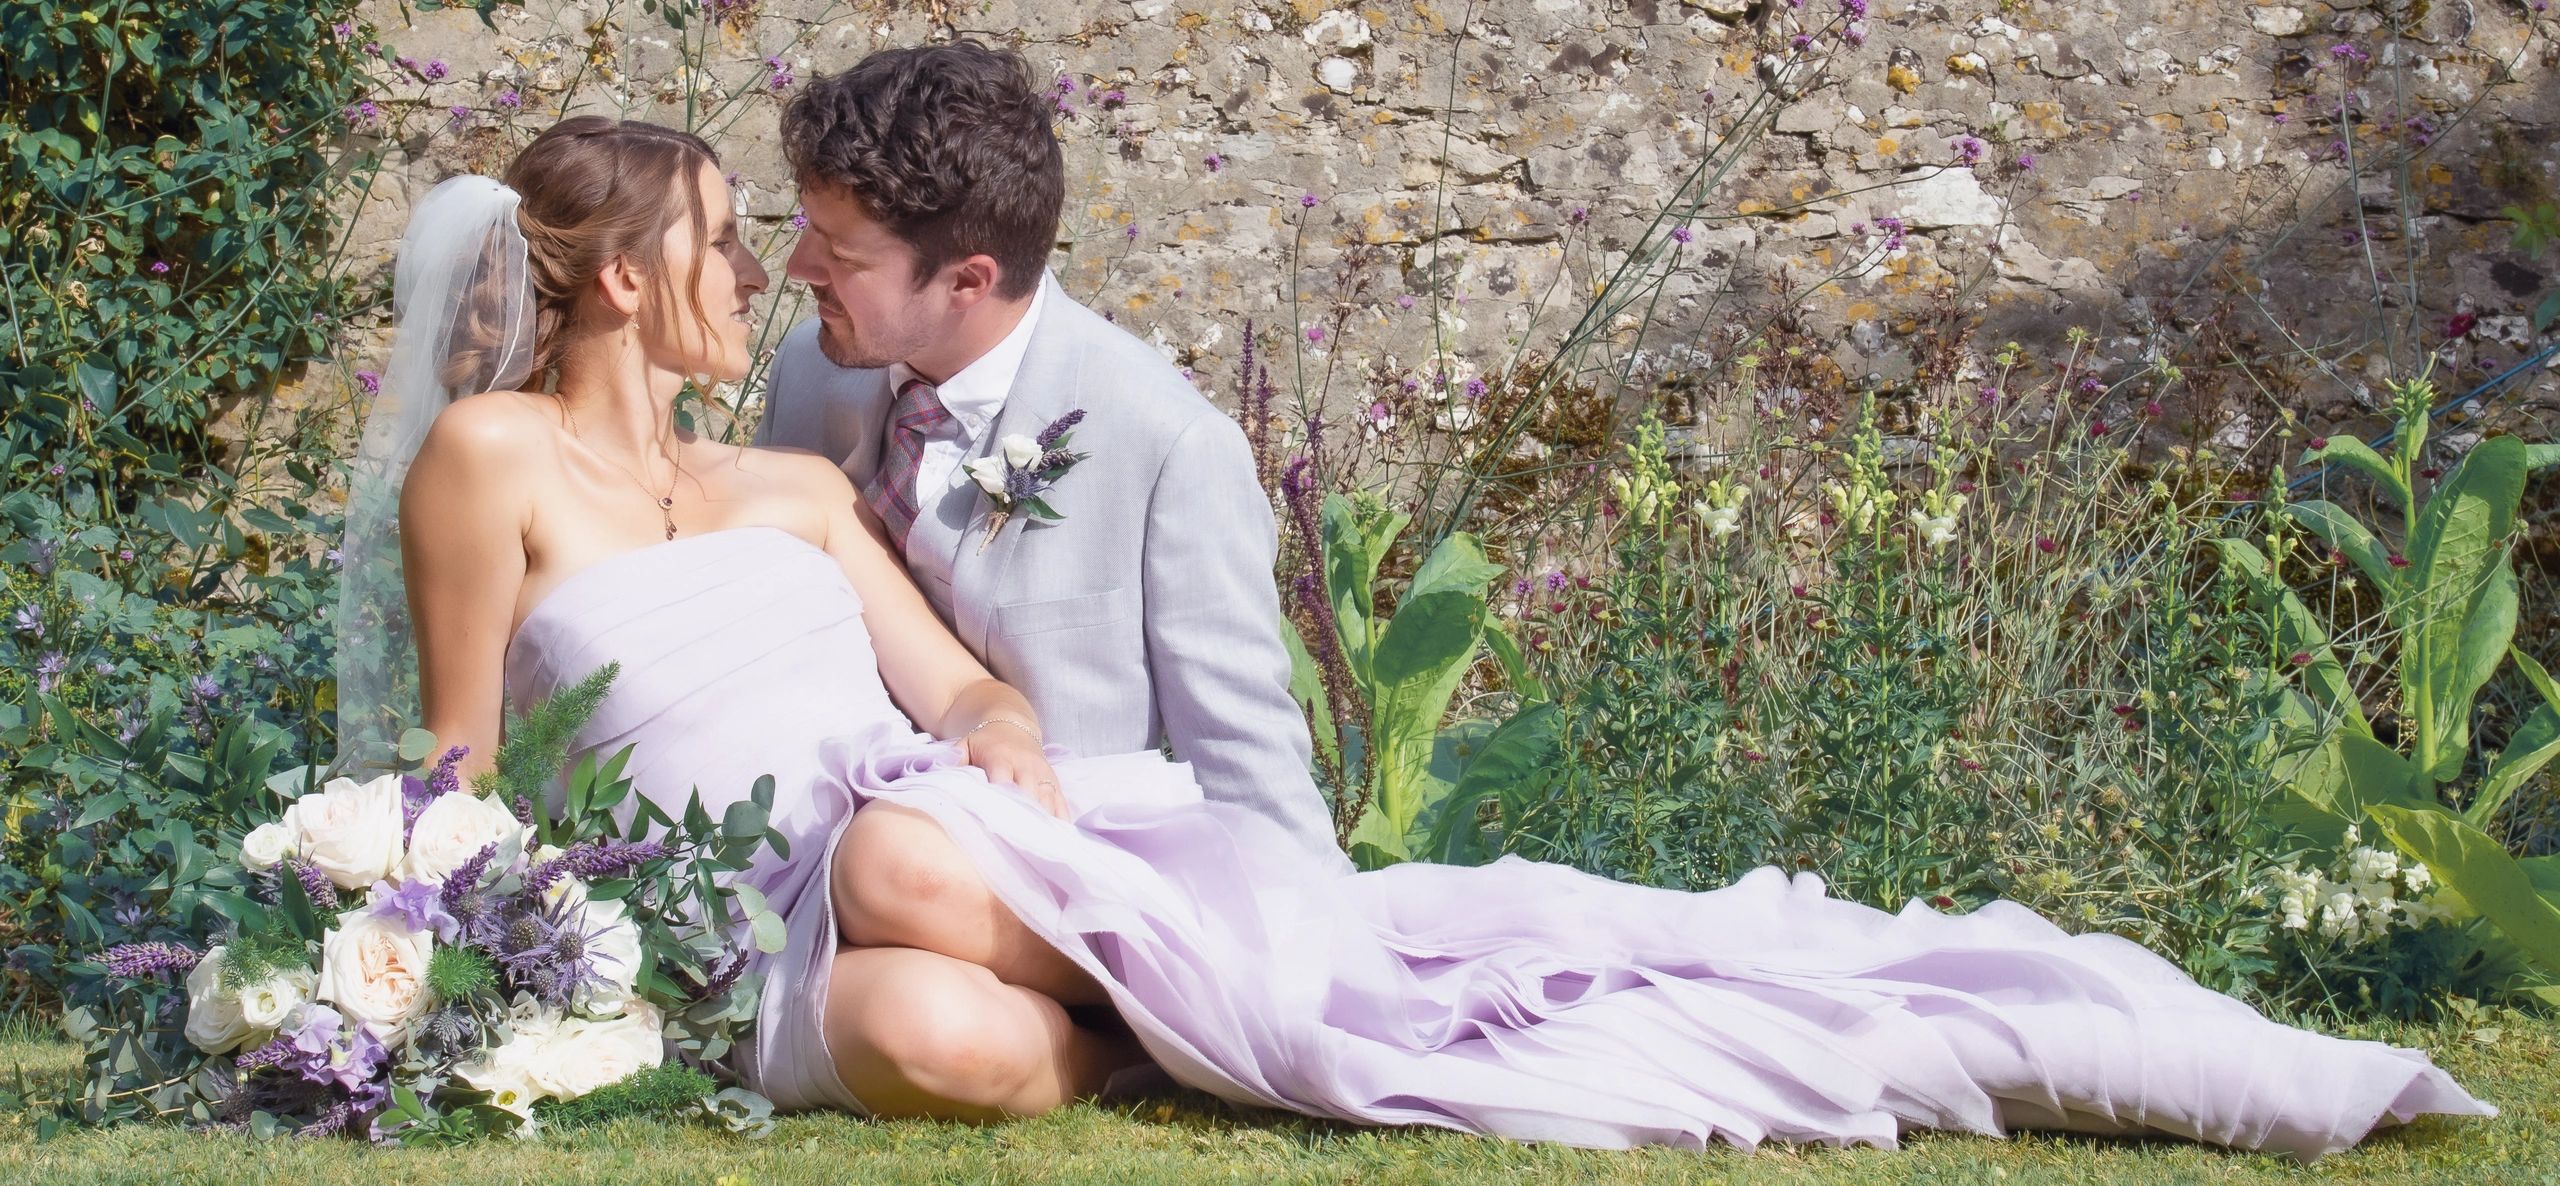 Bride groom love romance elegant contemporary wedding photography classic photo documentary Dorset